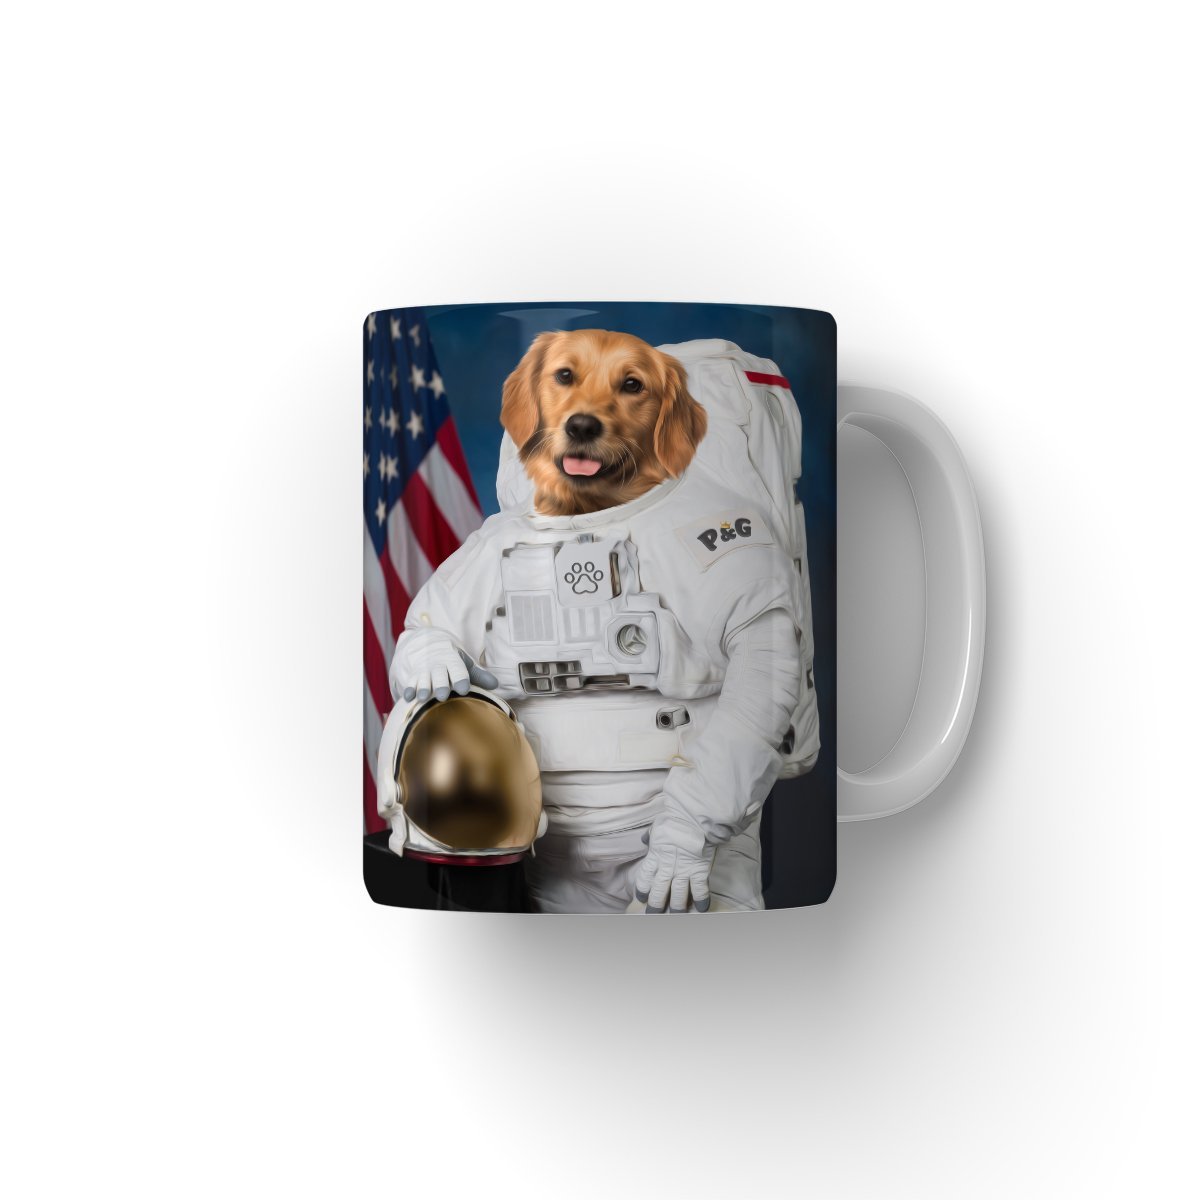 The Astronaut: Custom Pet Mug - Paw & Glory - #pet portraits# - #dog portraits# - #pet portraits uk#paw & glory, custom pet portrait Mug,face on mug, custom mug with photo, image on mug, mug dog, coffee mug prints